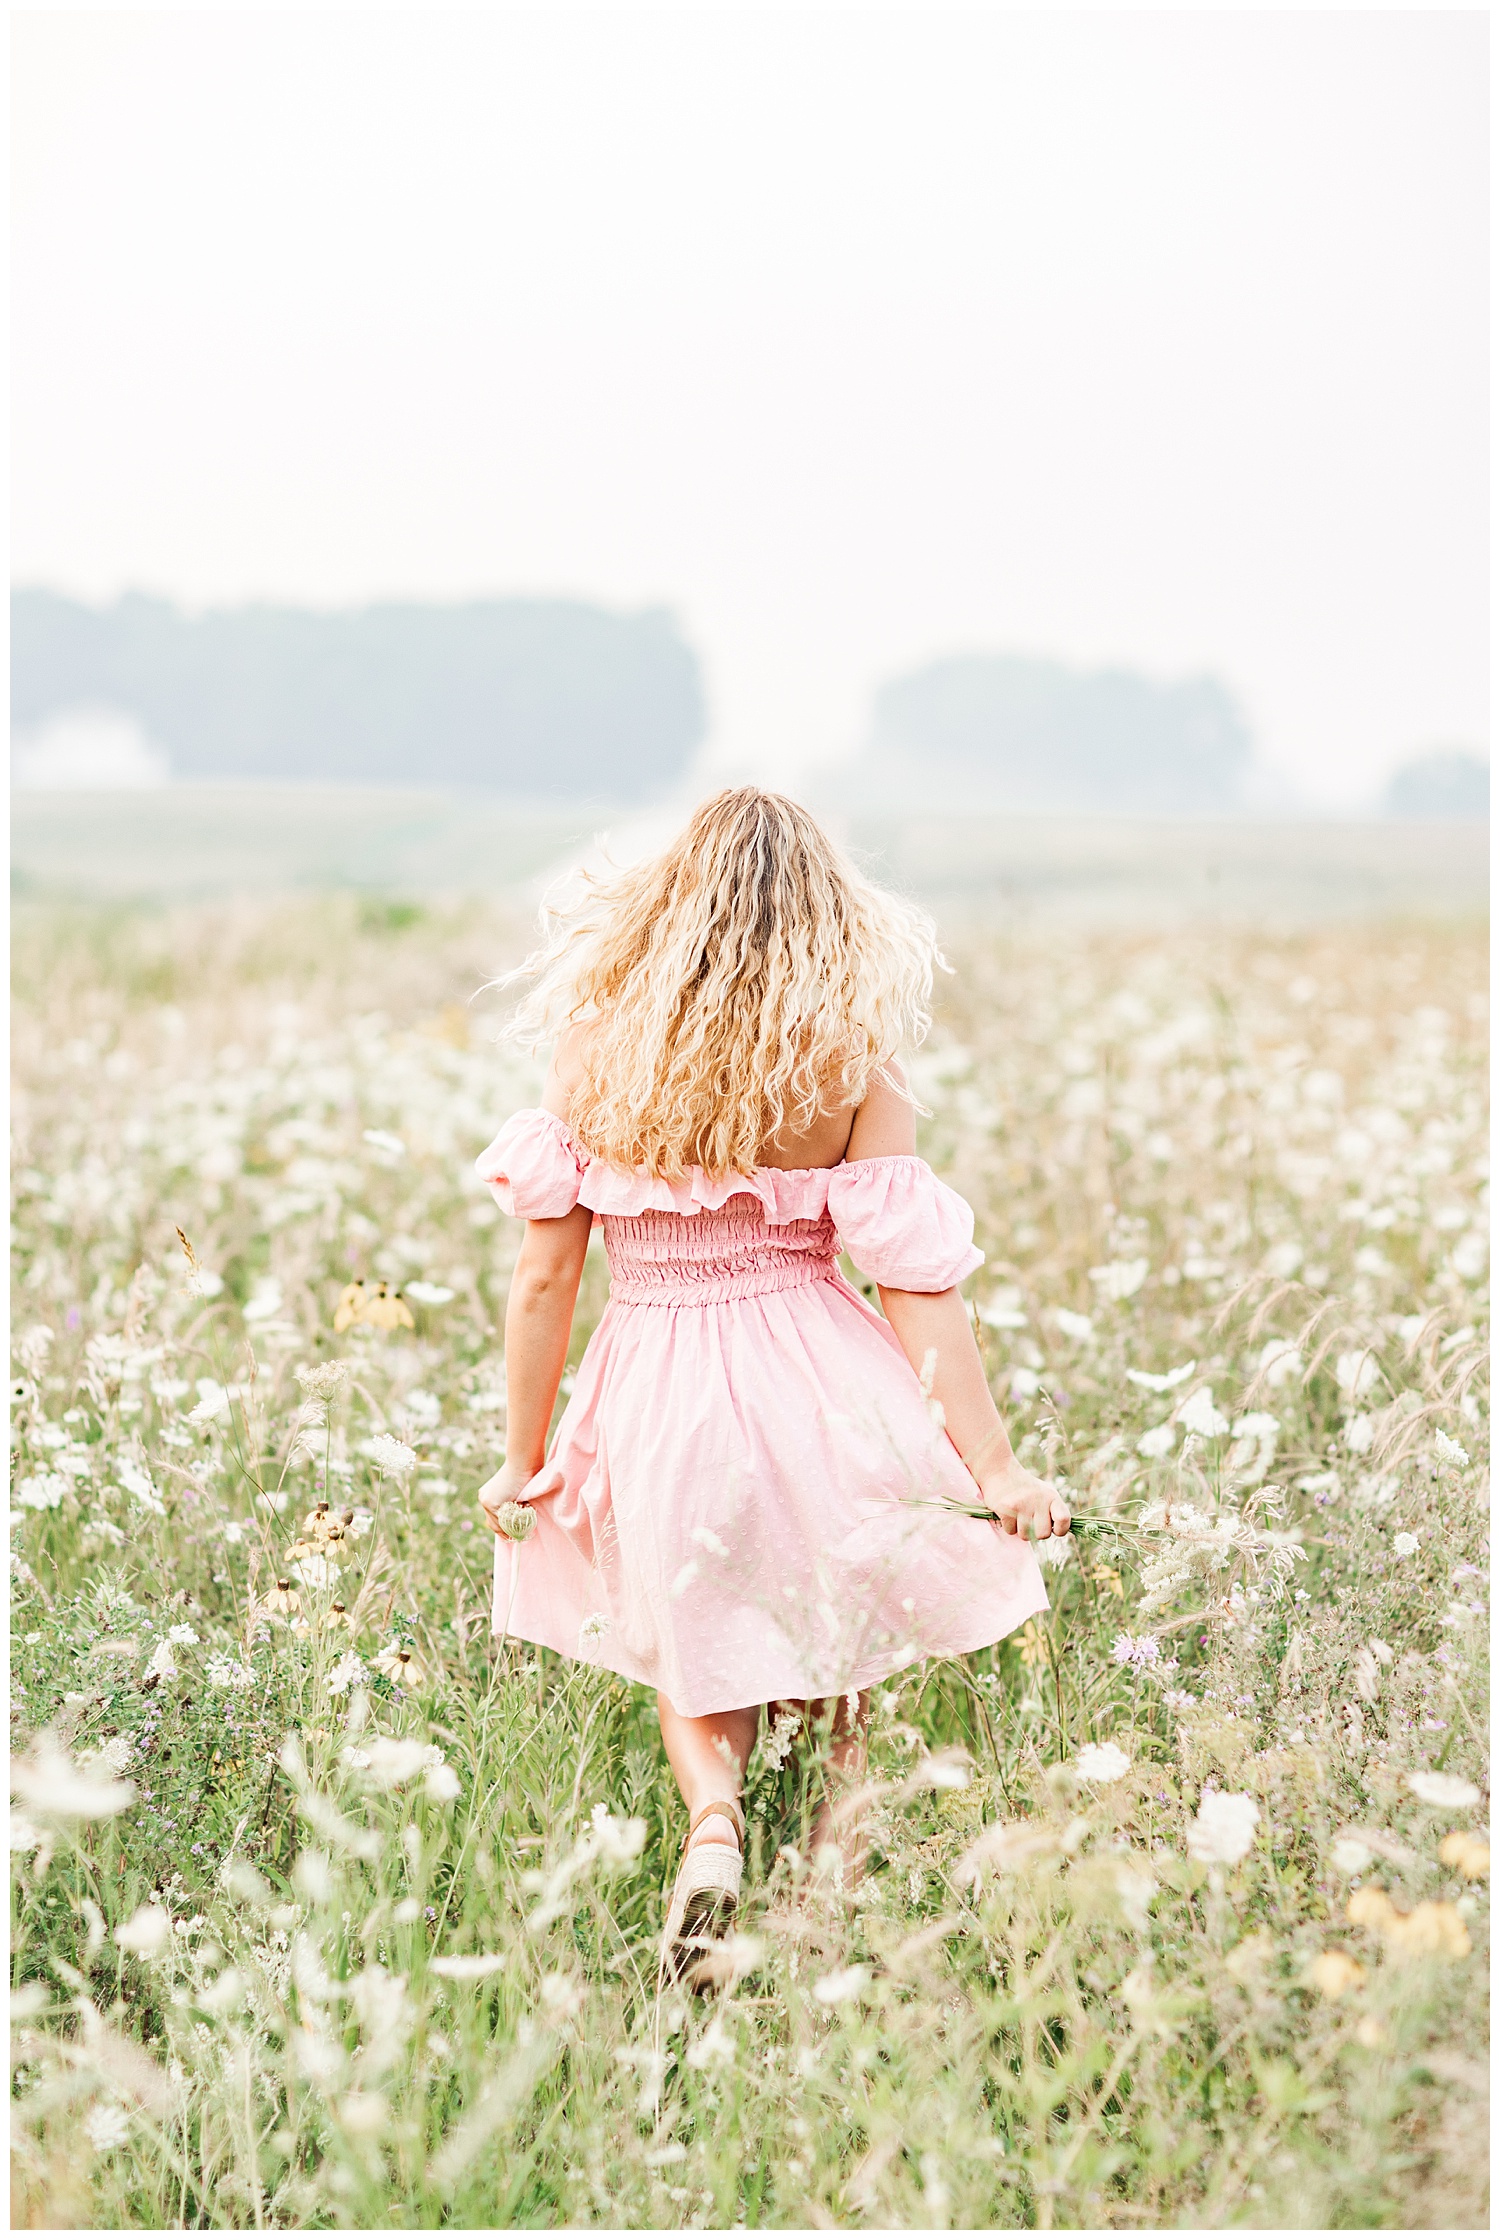 Senior Rachel wearing a light pink off the shoulder dress runs away in a wildflower field | CB Studio